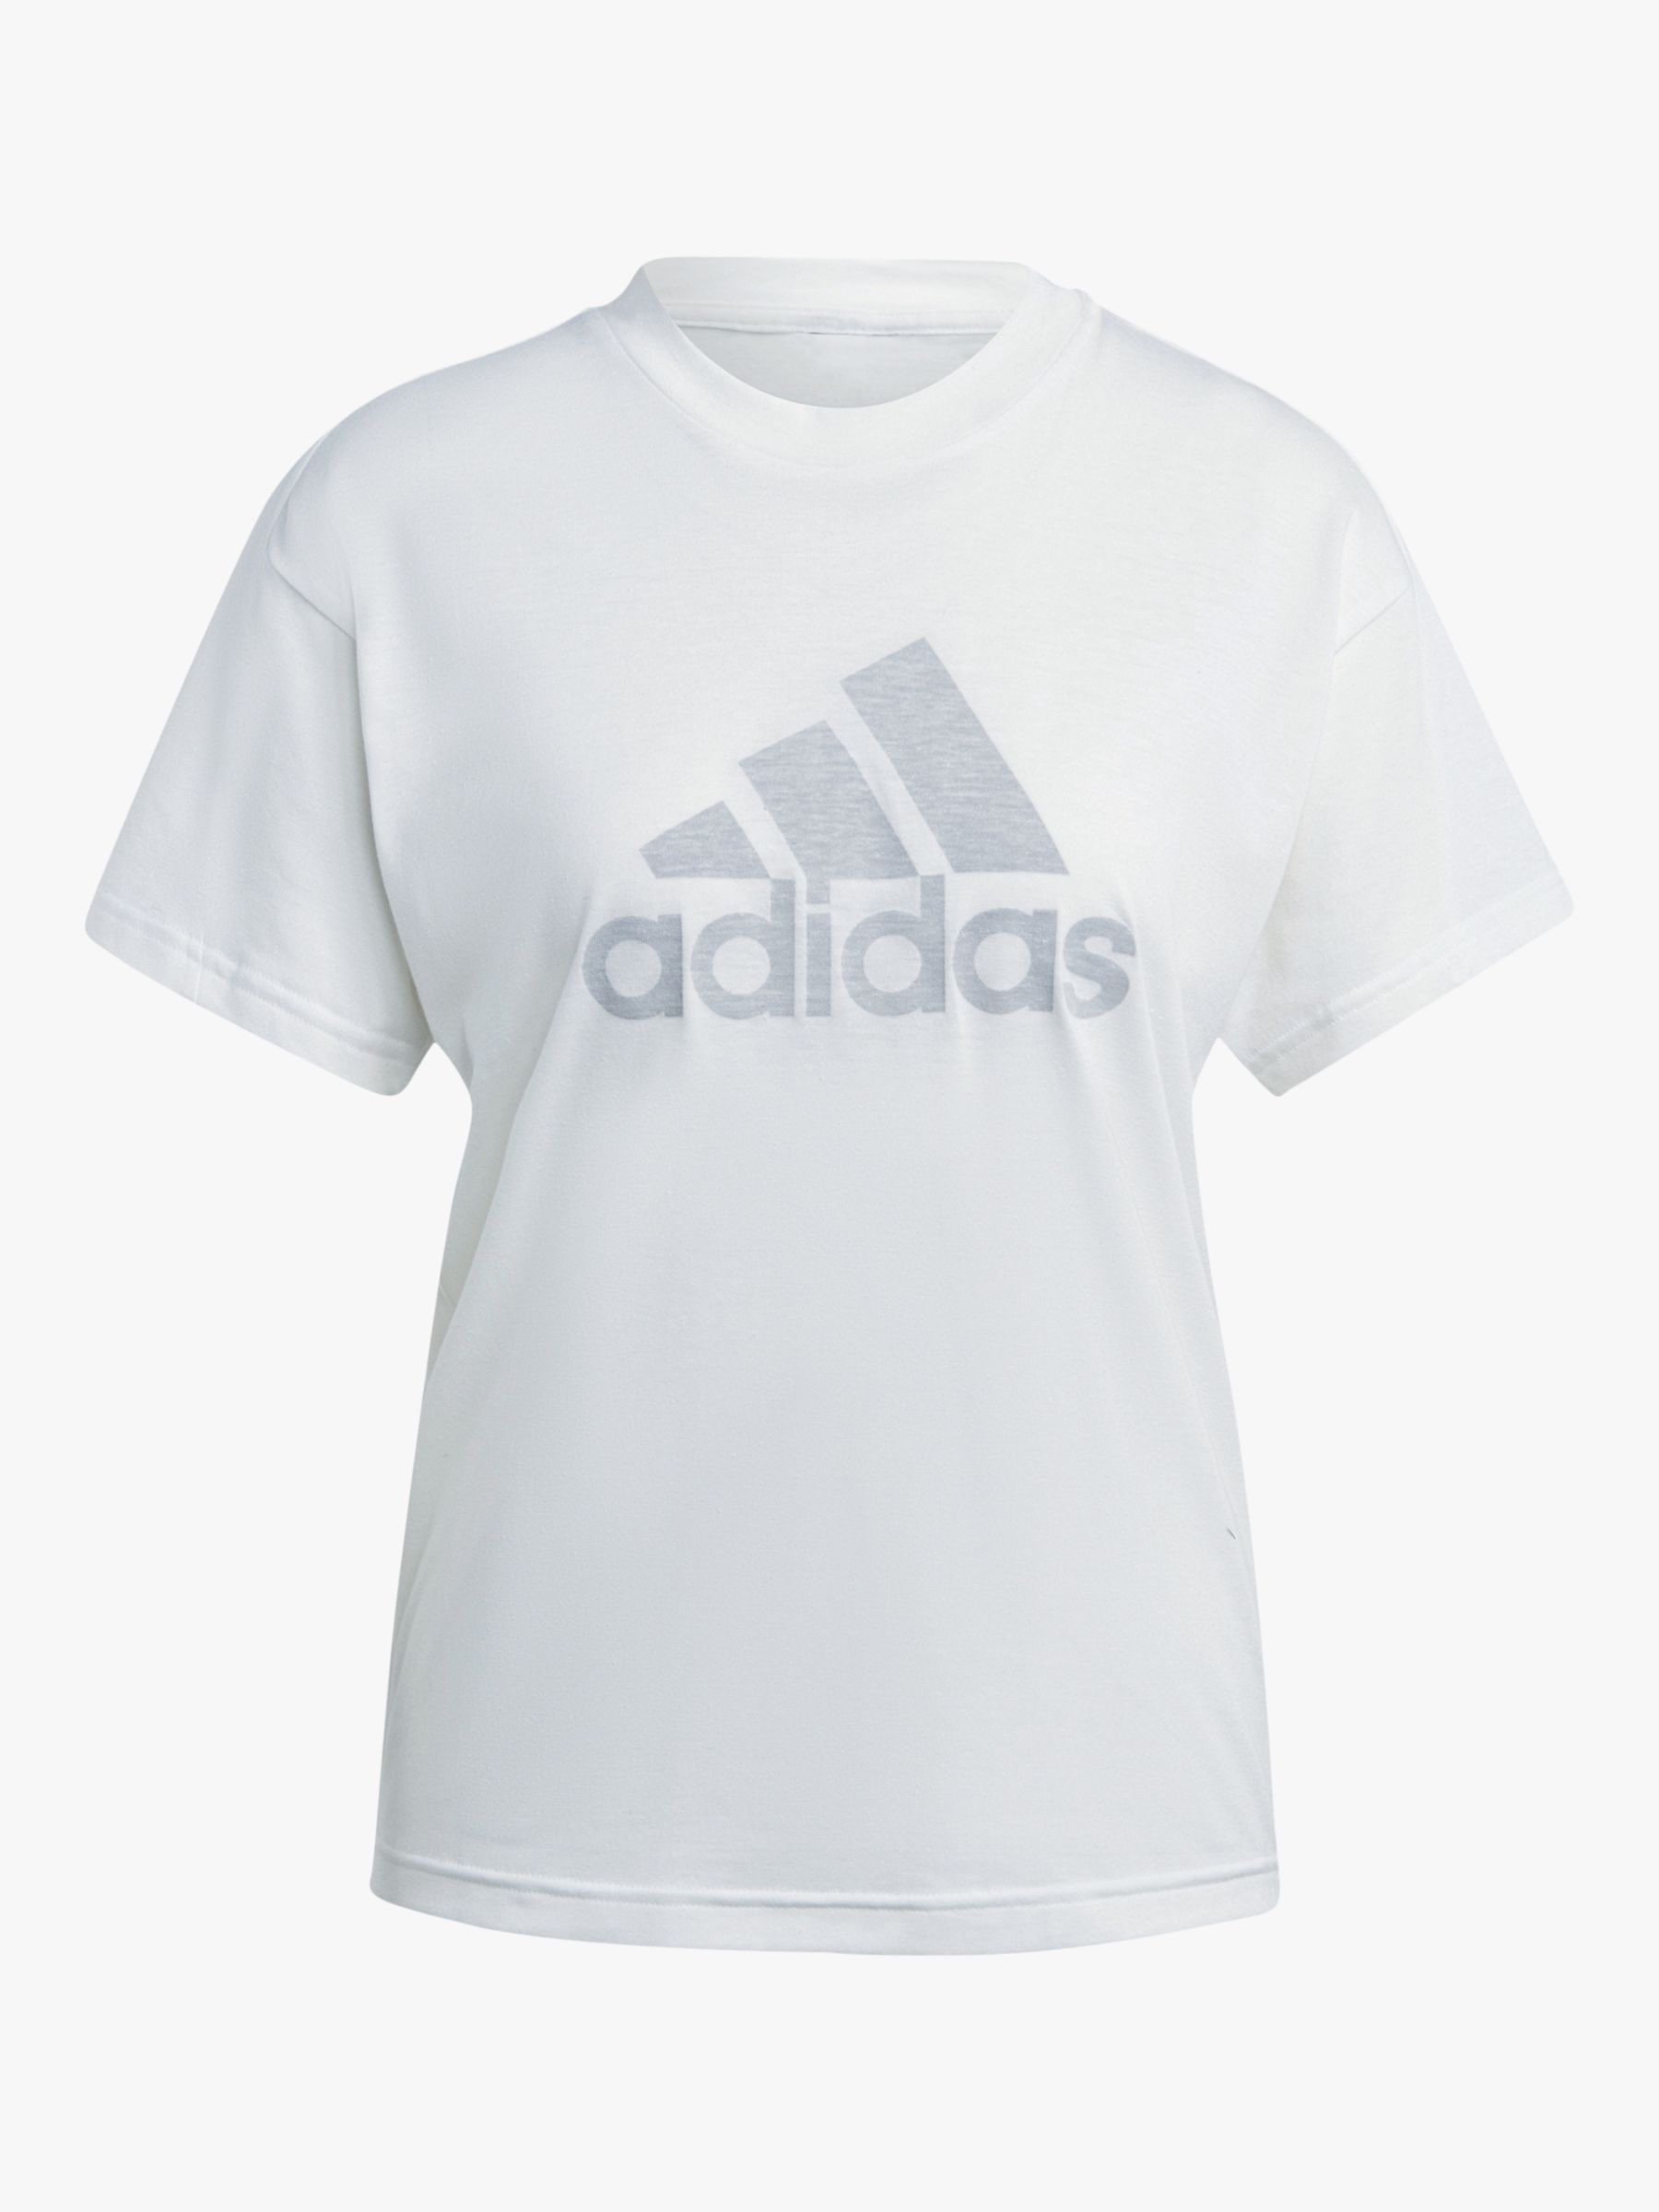 Top, Melange, adidas XS Future Gym White Icons 3.0 Winners Sportswear